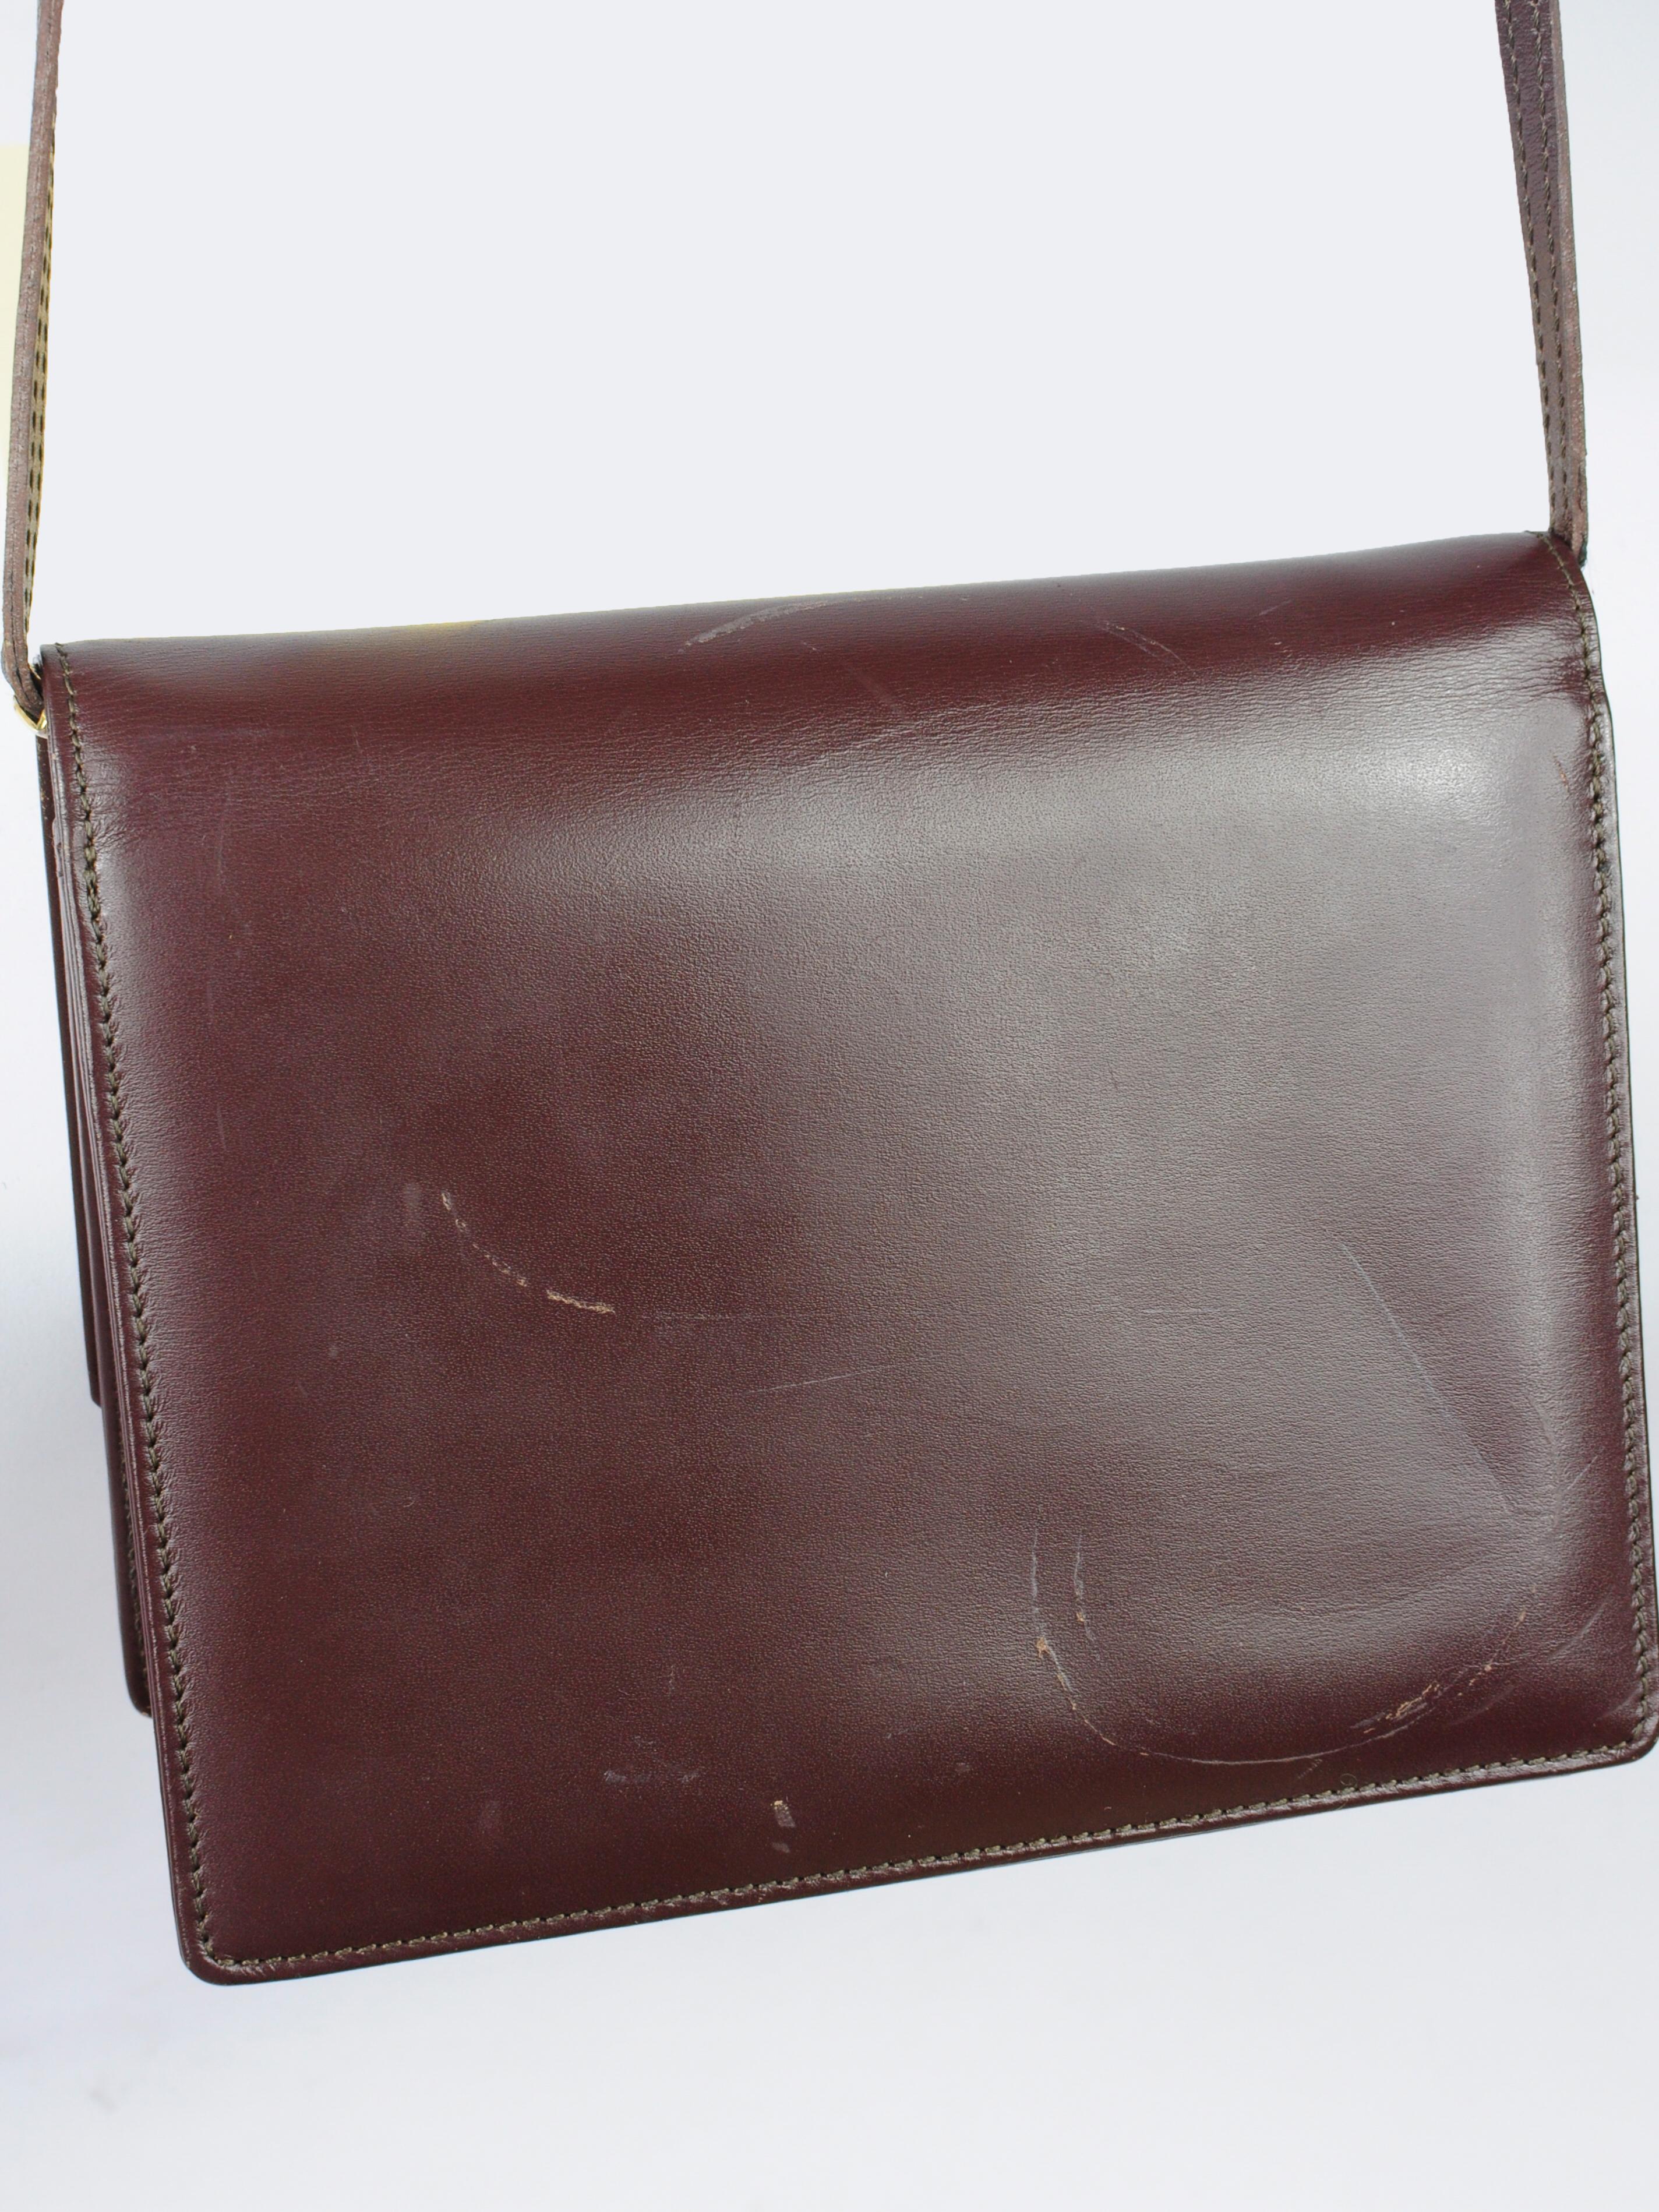 Gianni Versace Medusa Brown Leather Crossbody Mini Bag 1990s For Sale 3